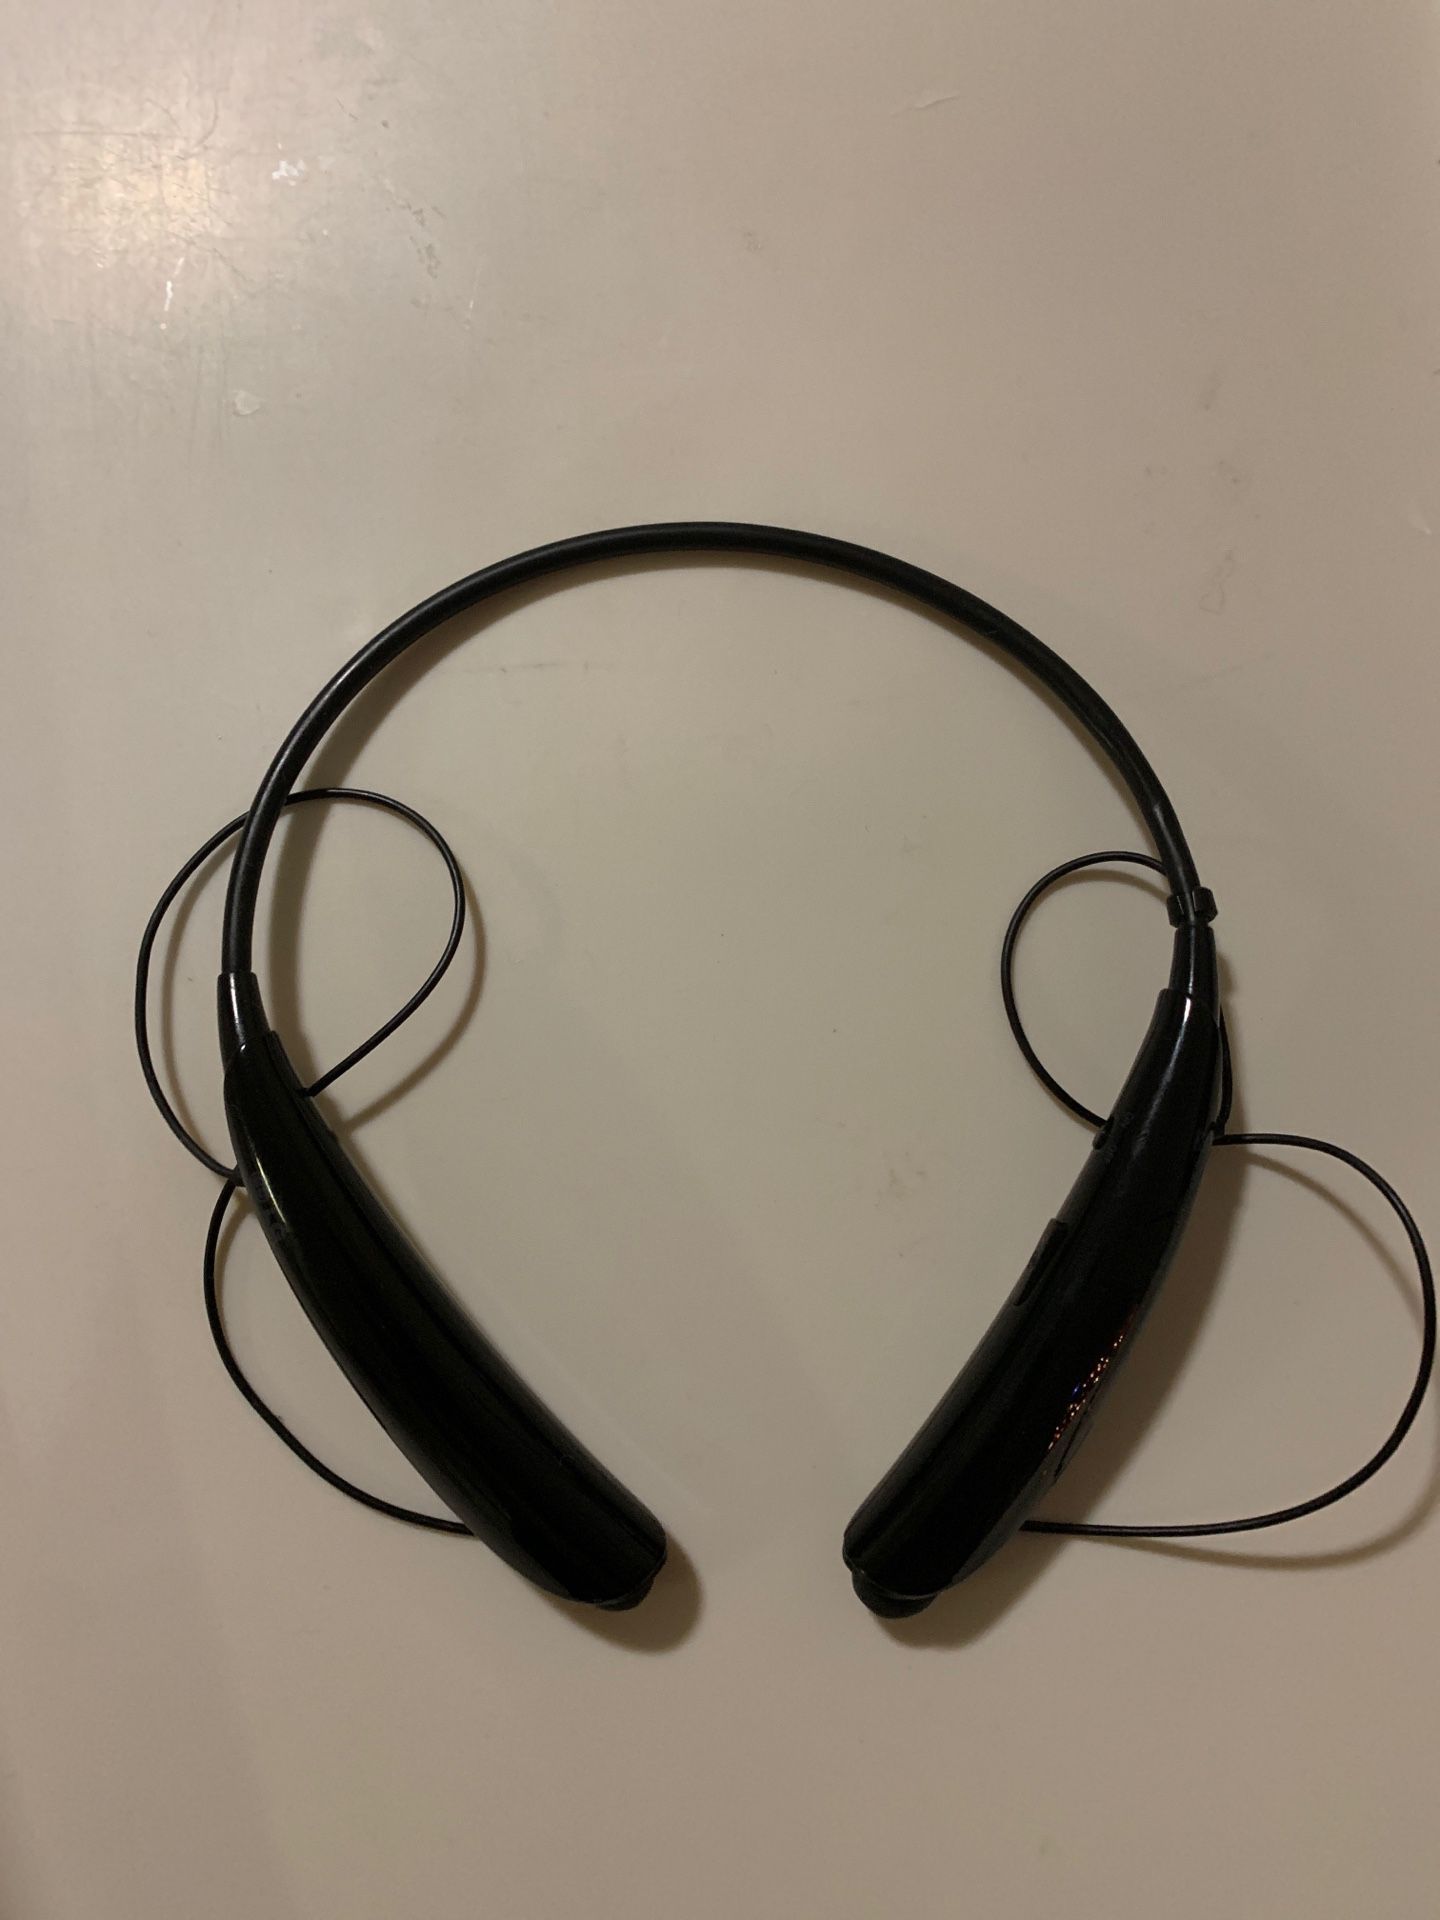 LG wireless headset